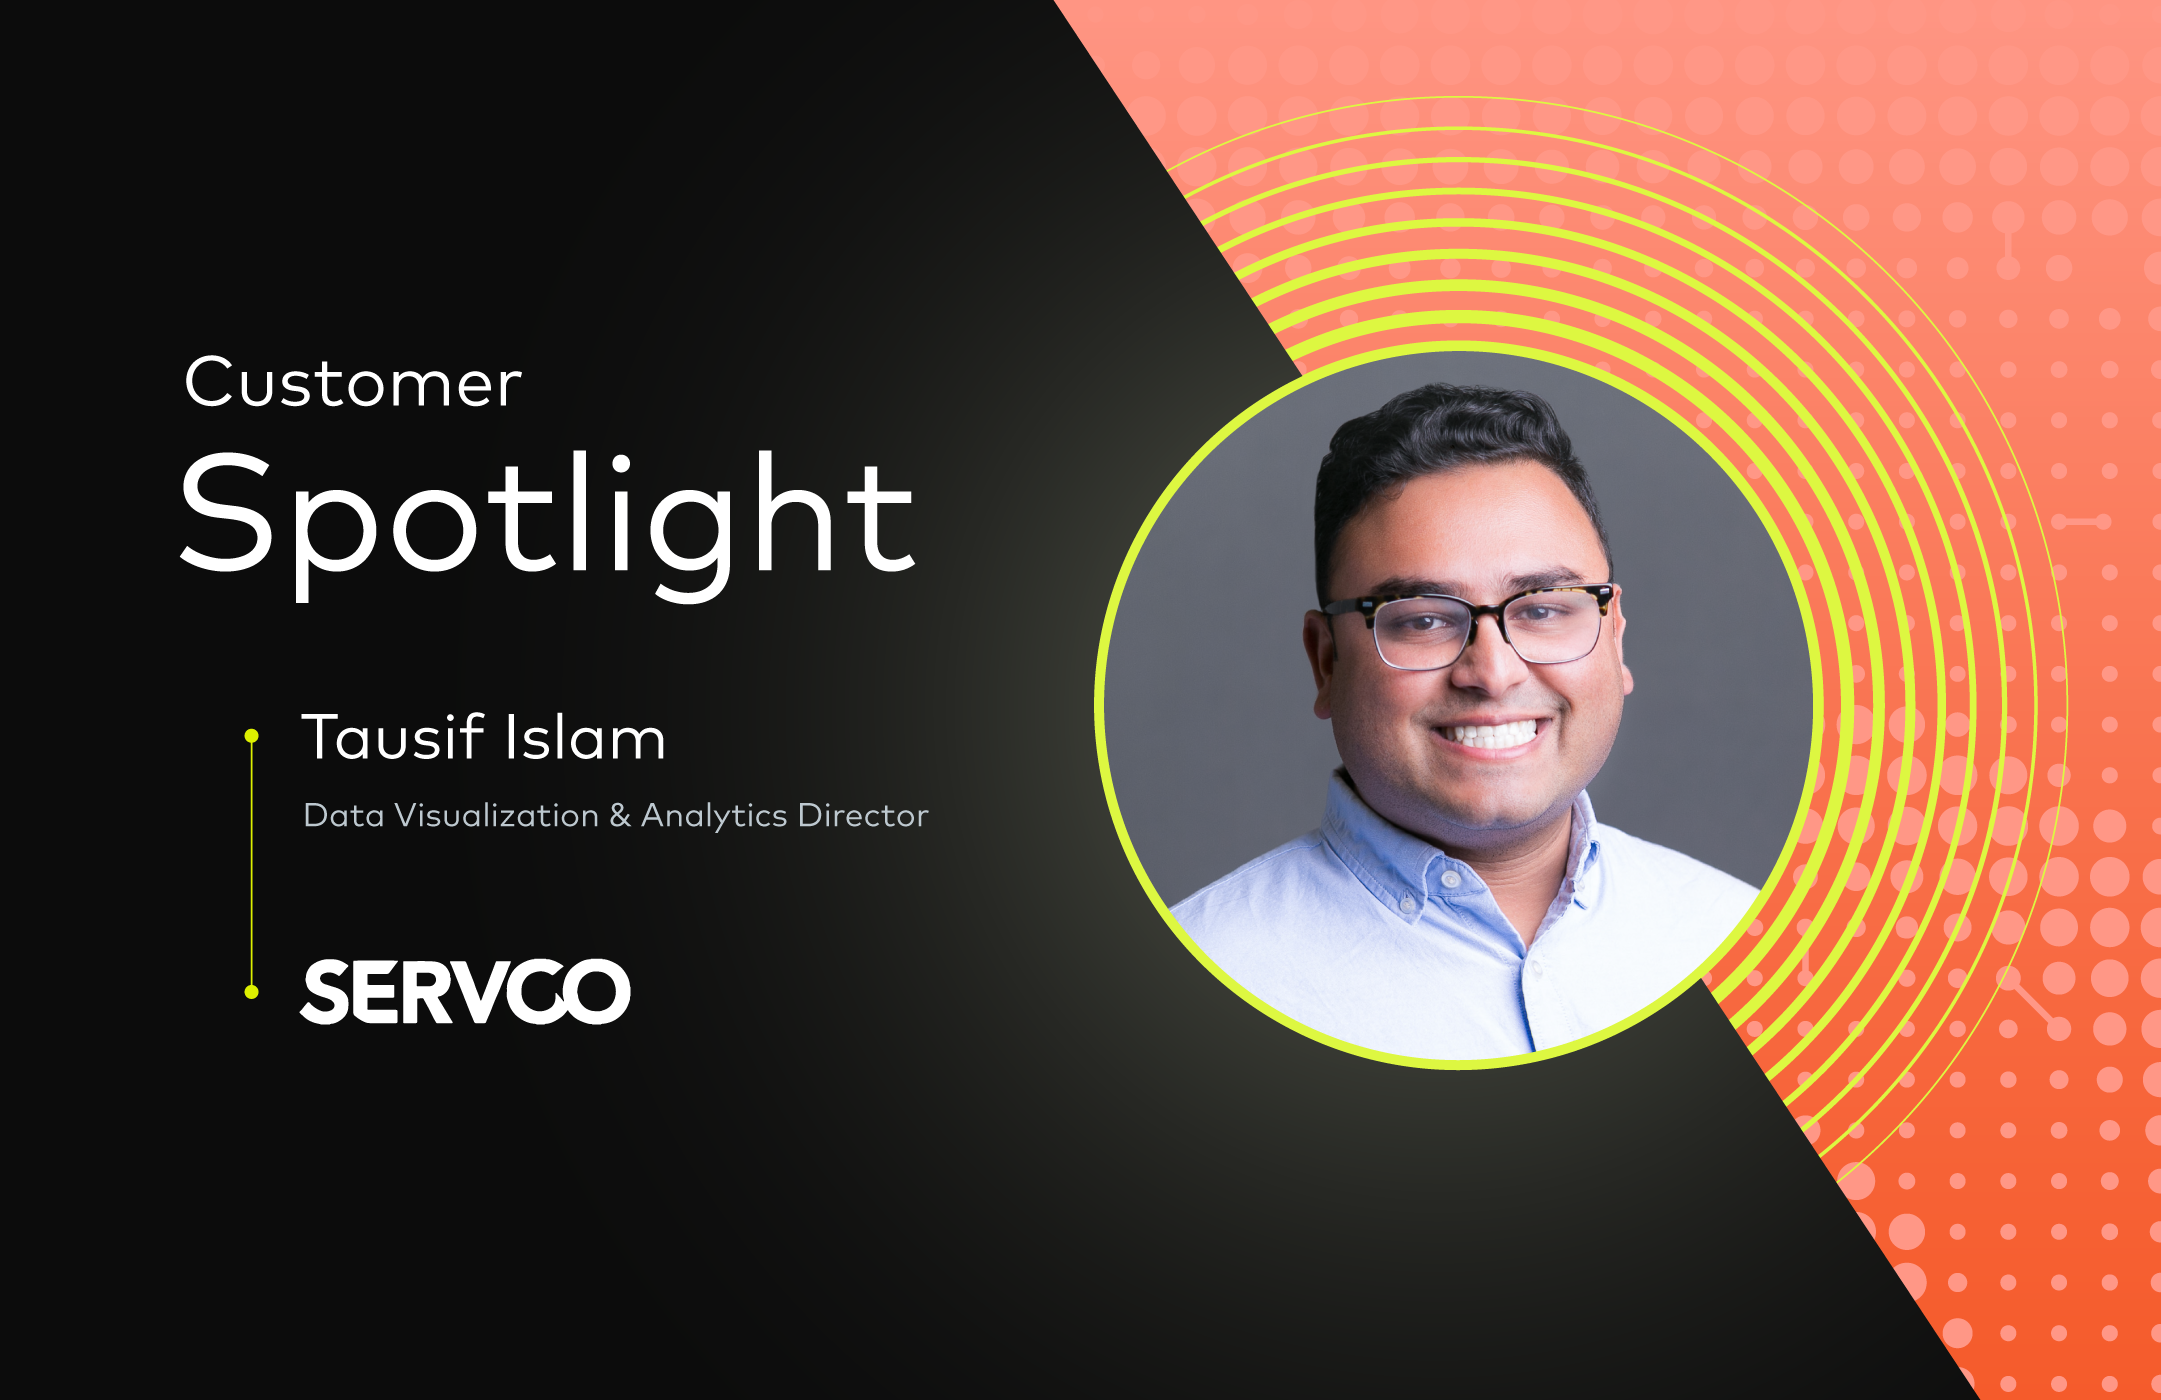 Customer Spotlight Hero: Tausif Islam from Servco